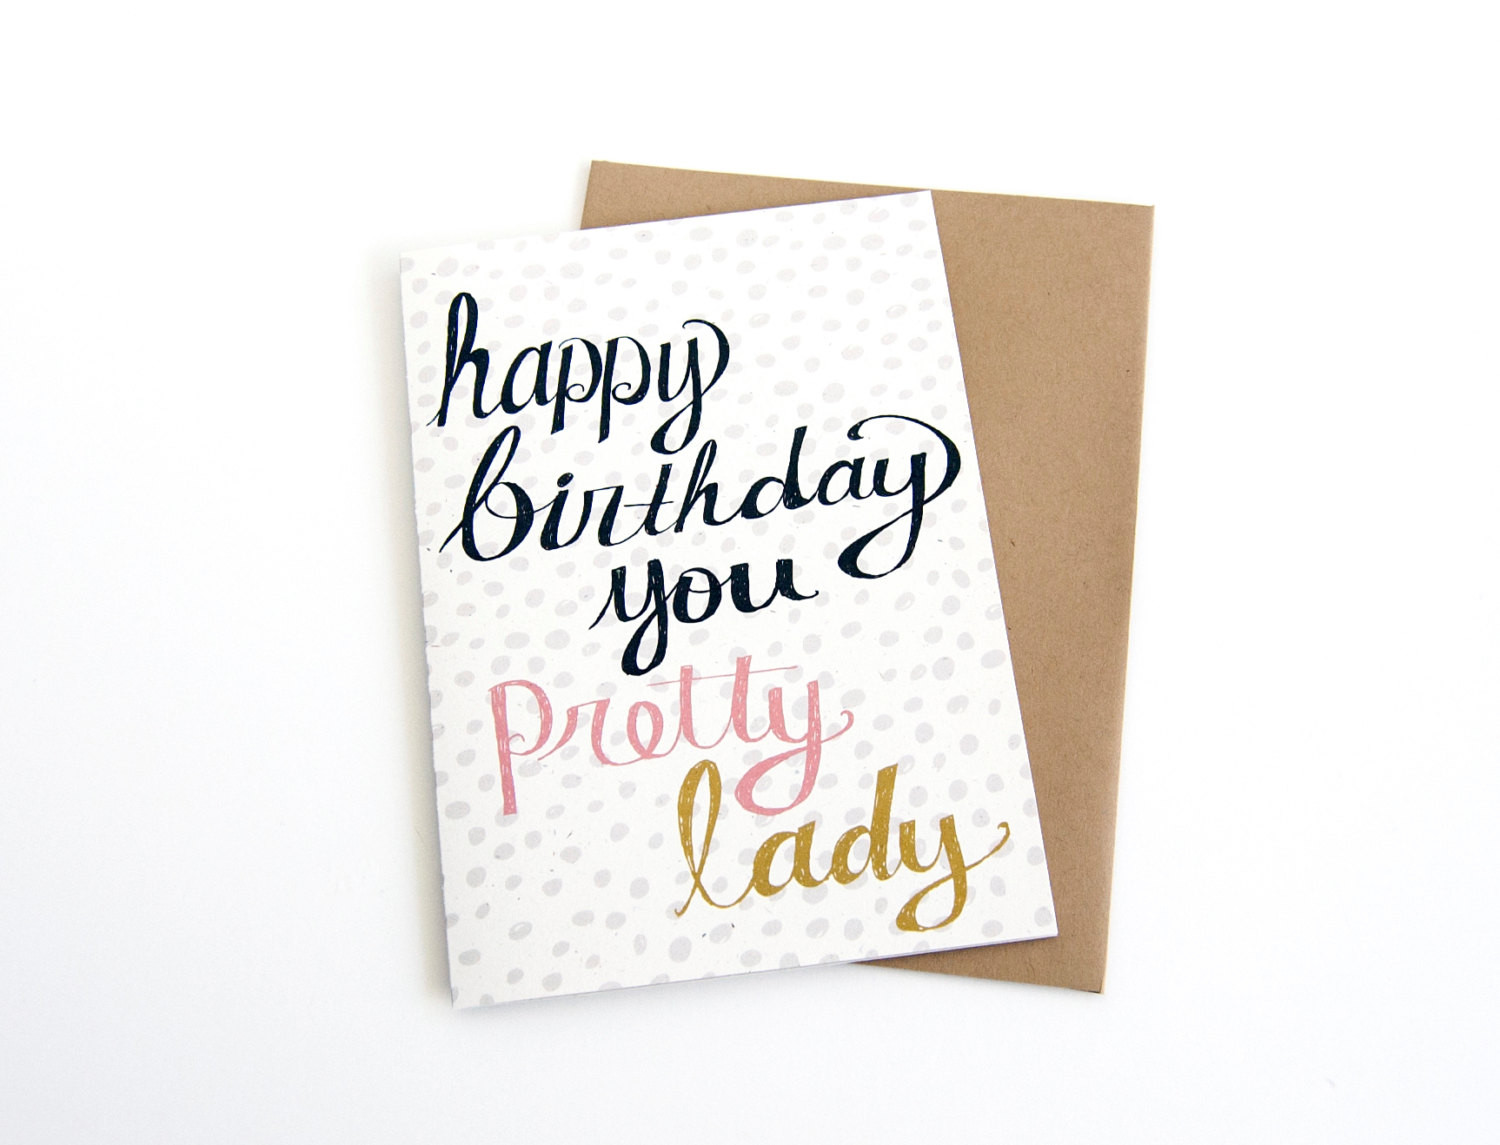 Best ideas about Birthday Card For Girlfriend
. Save or Pin Birthday Card For Her Mom Birthday Card Girlfriend by KatieVaz Now.